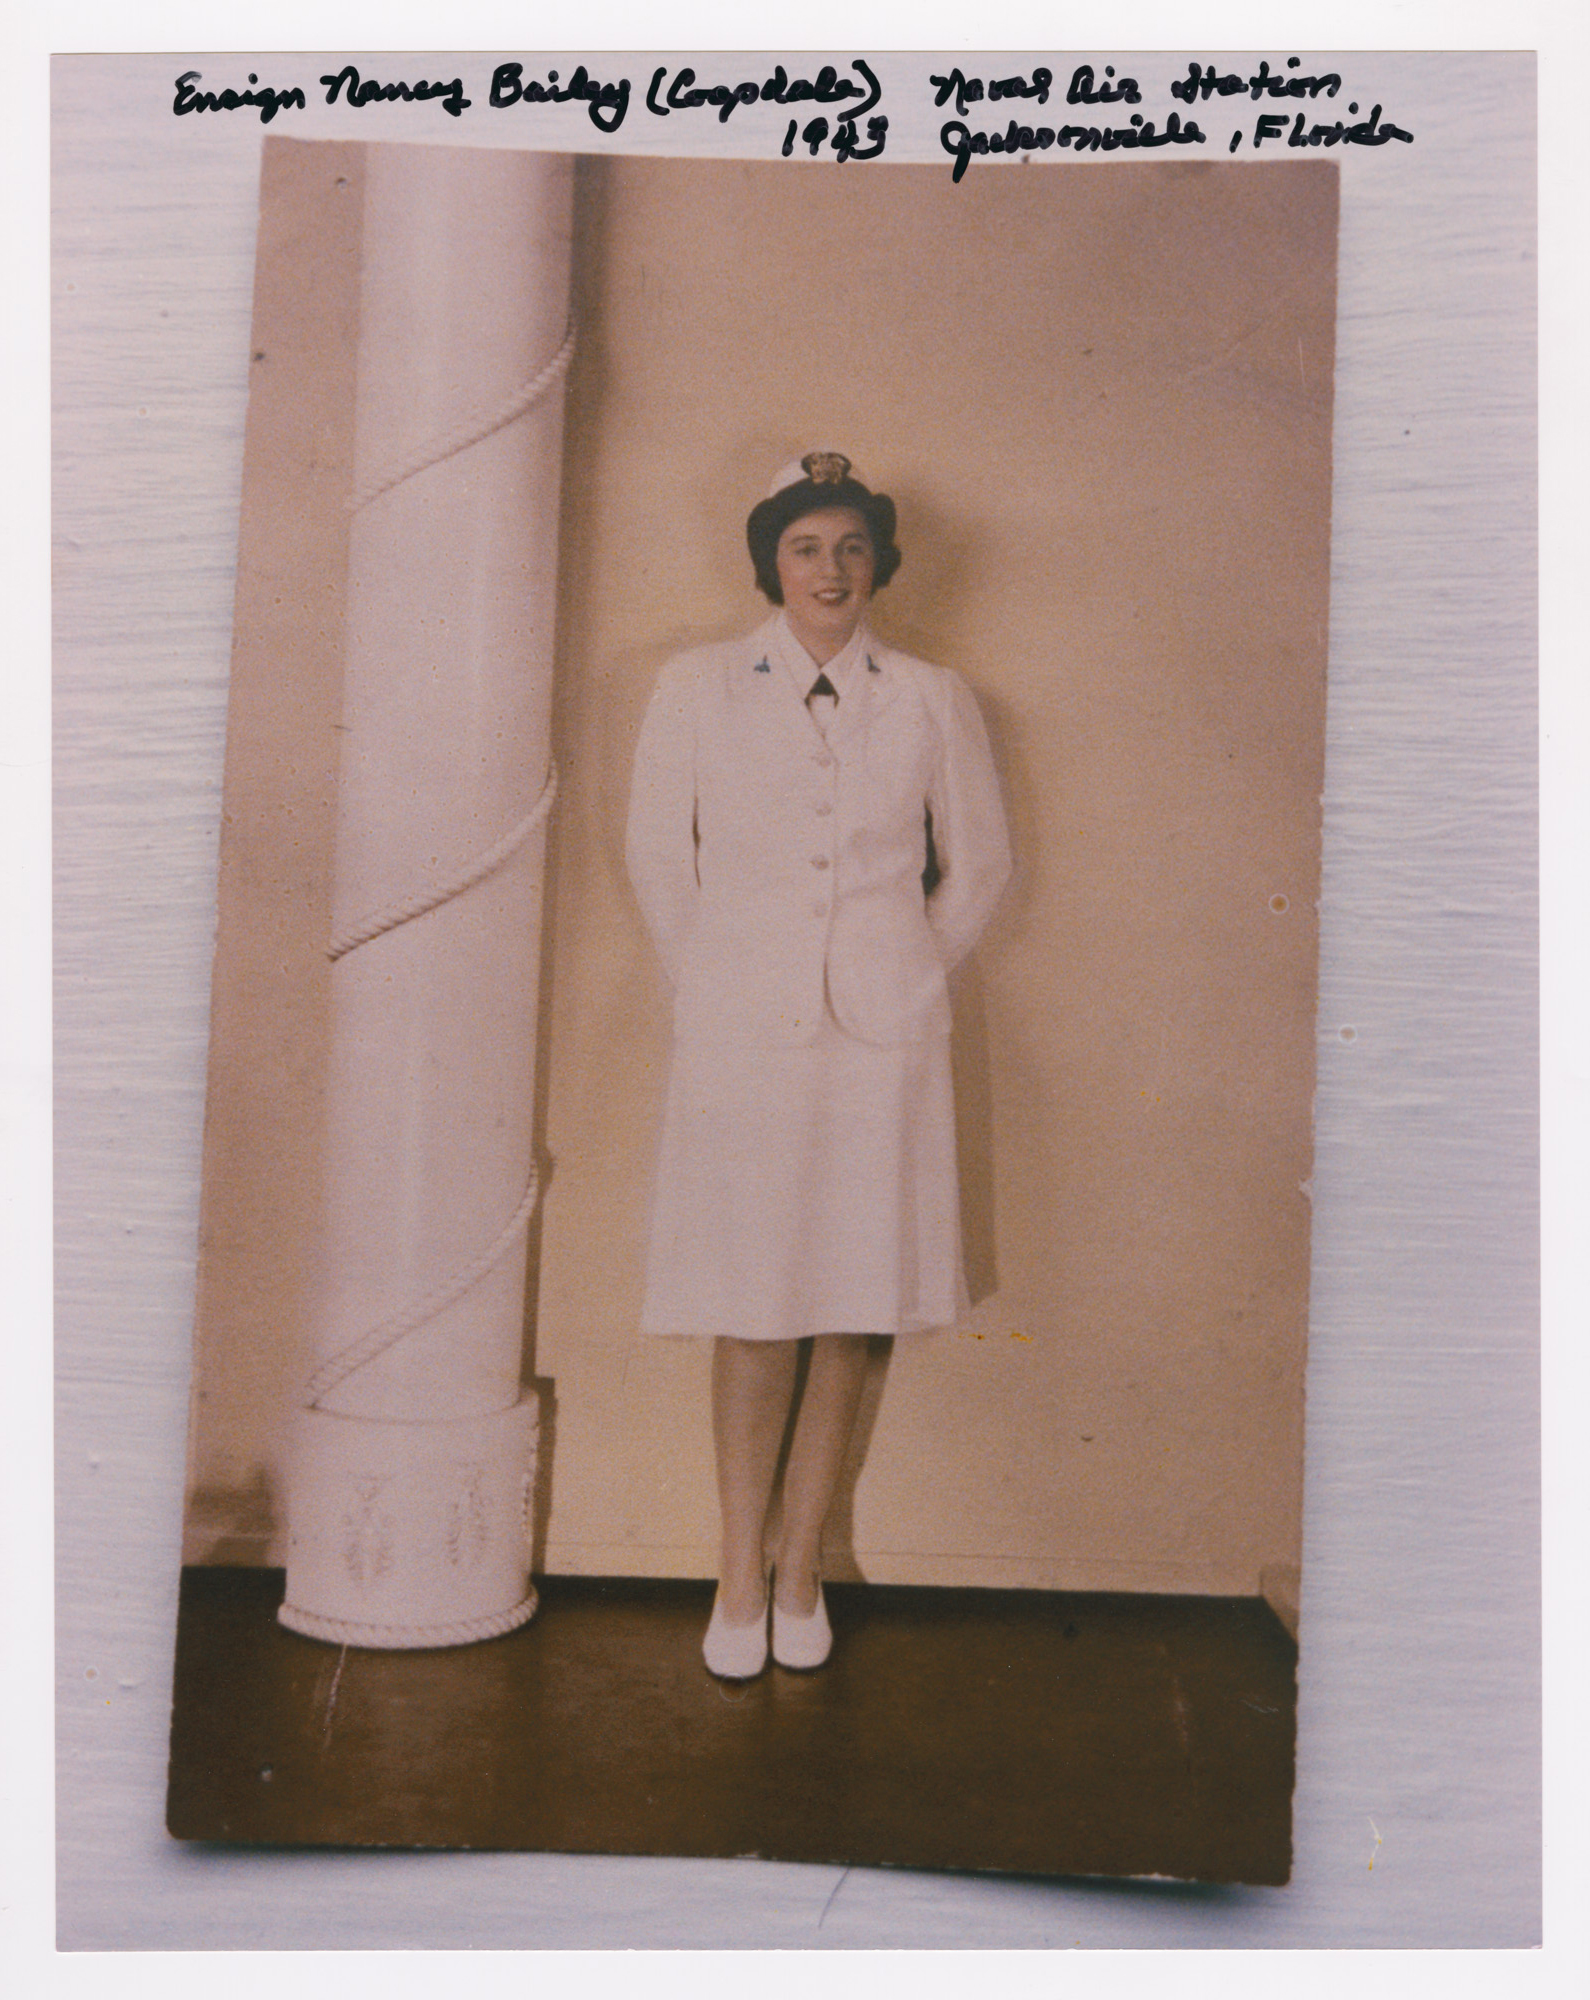 Ensign Nancy Bailey Bon Cogsdale in summer WAVE uniform at Naval Air Station, Jacksonville, Florida in 1943. (VMHC 1996.86.2. Gift of Nancy Bailey Bon Cogsdale) 